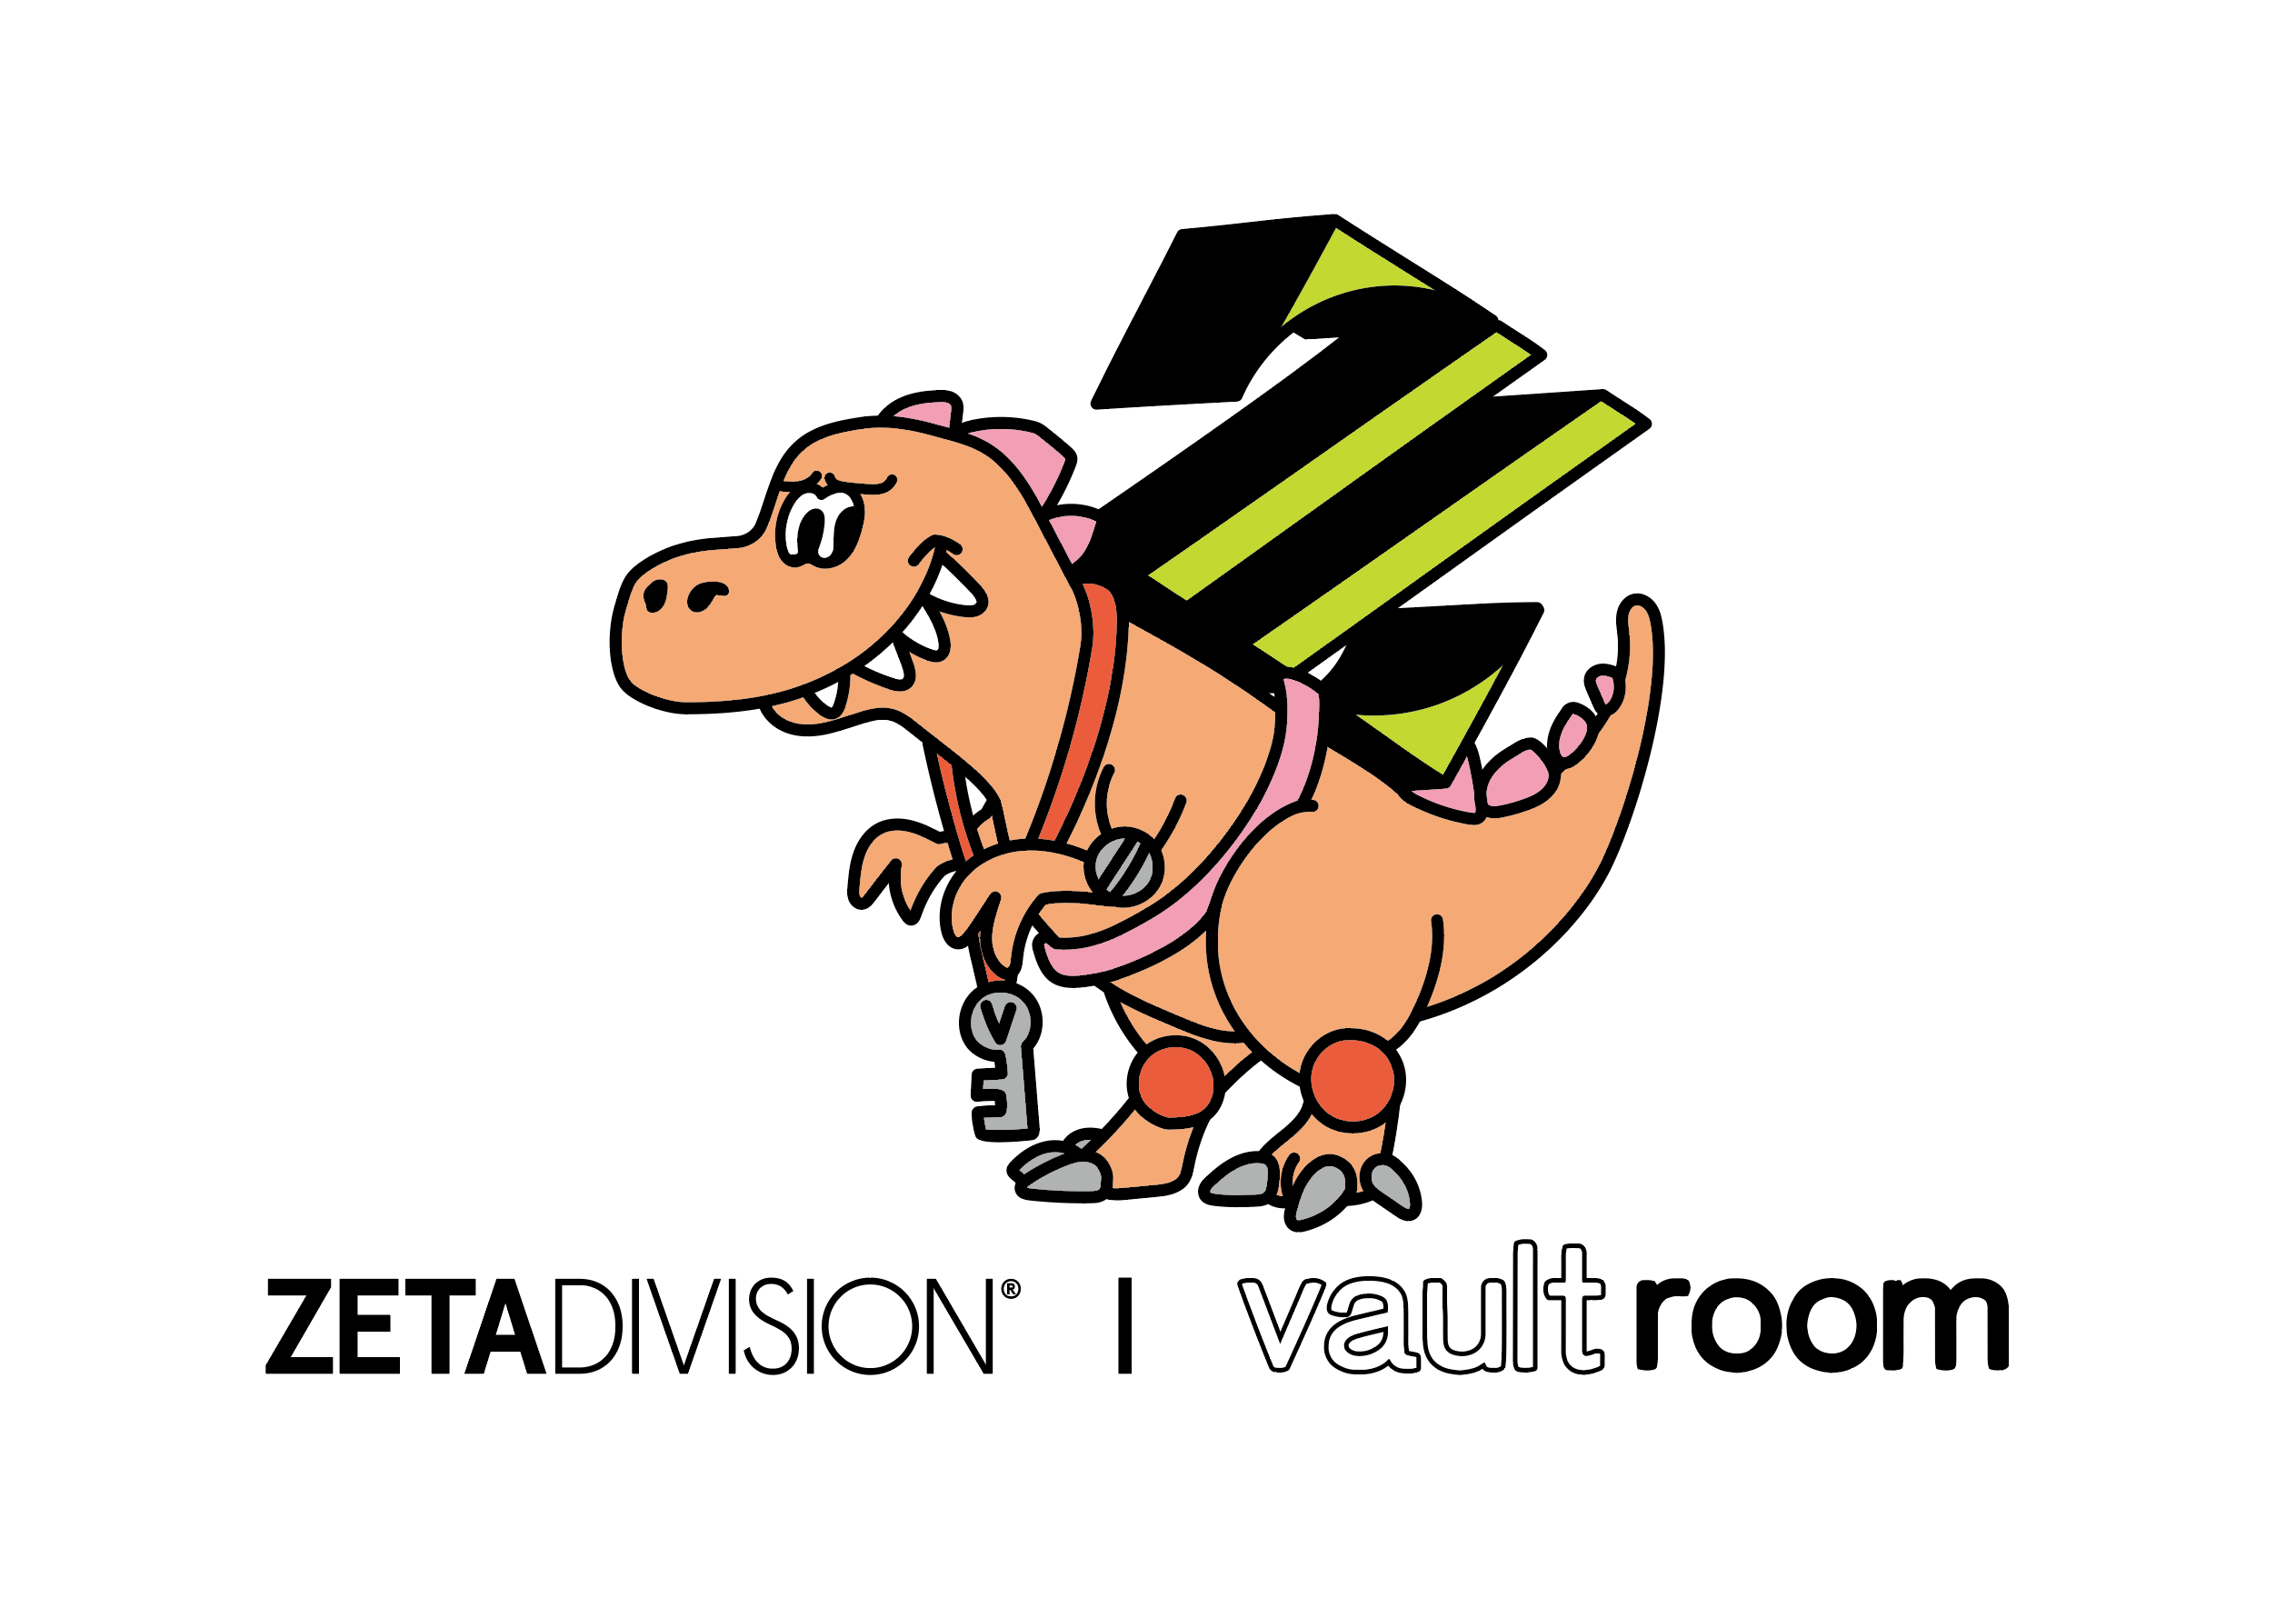 Vault Room×Zeta Division